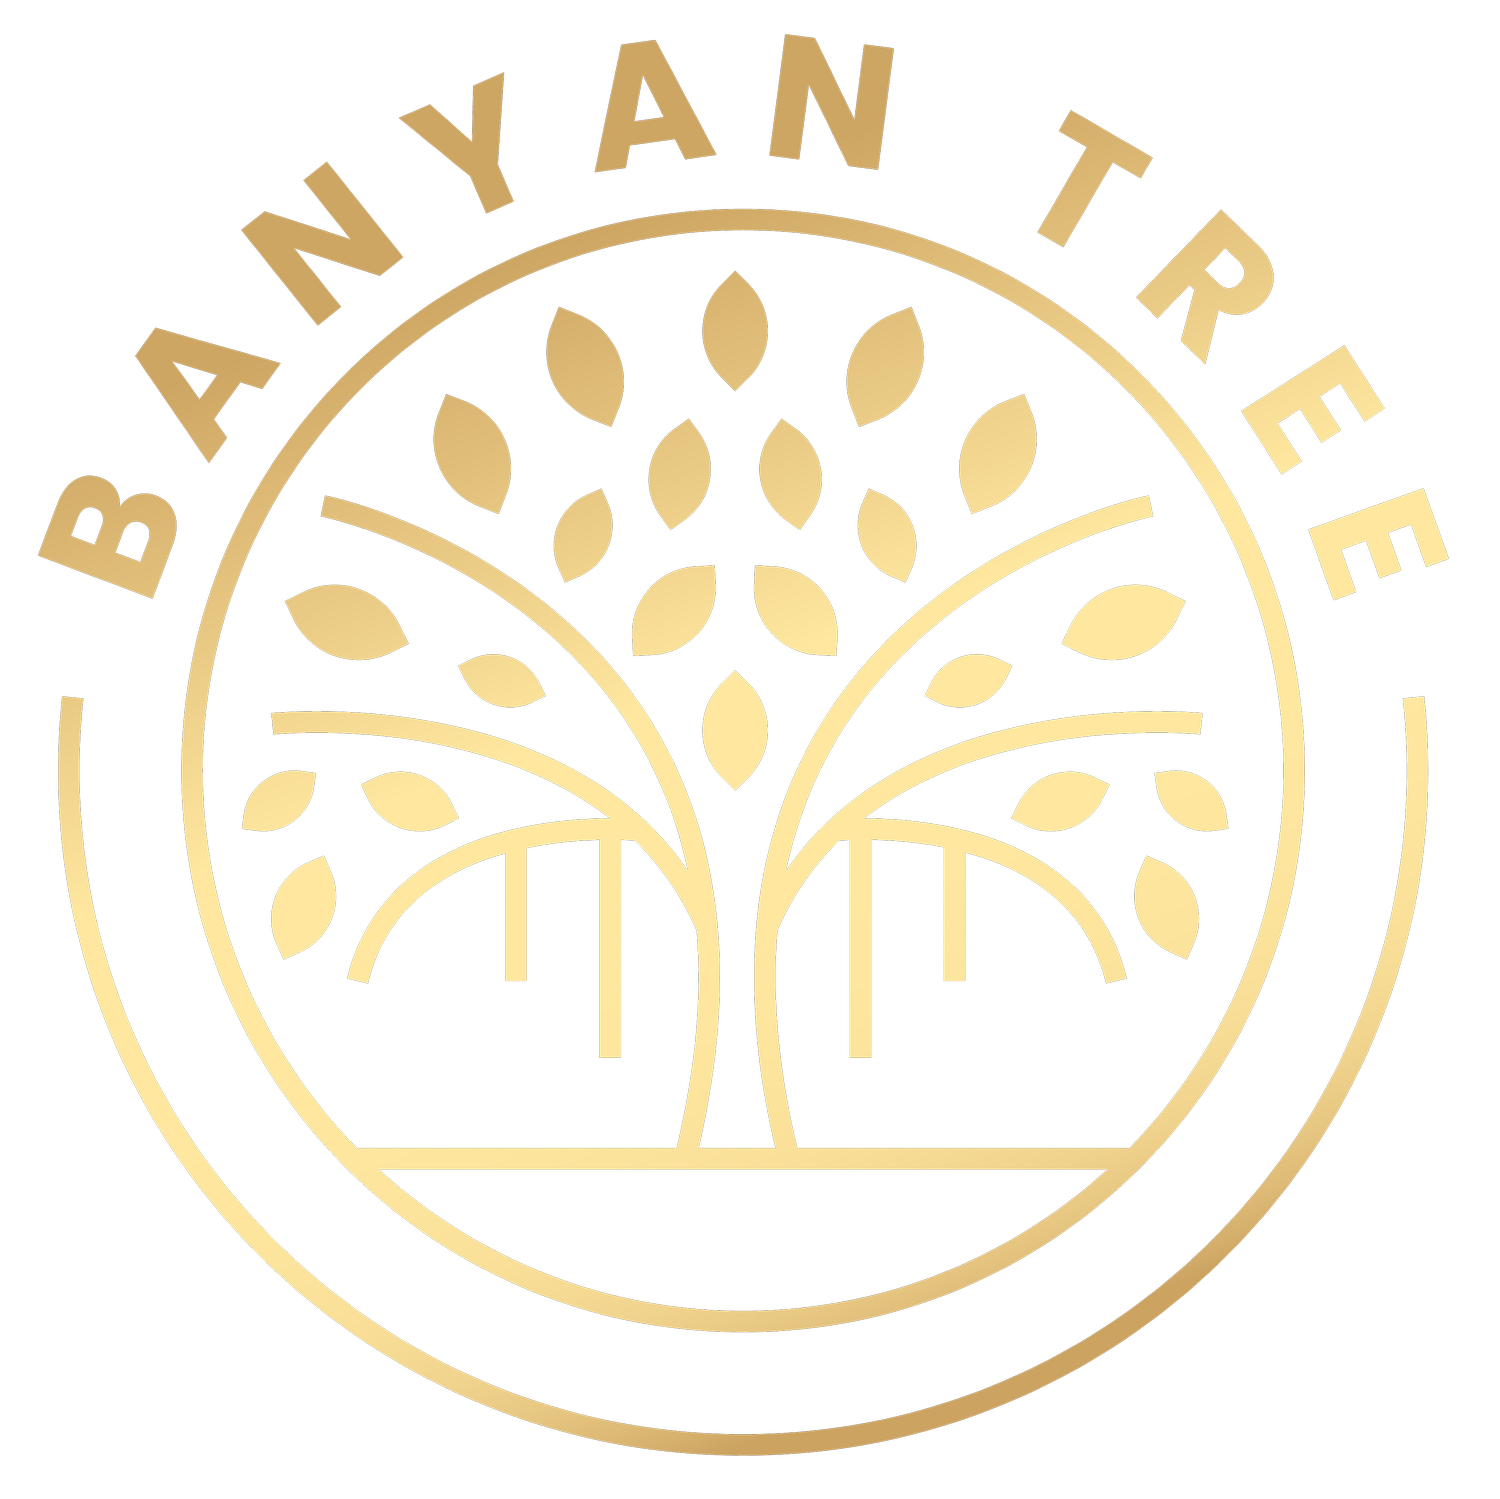 Banyan Tree Foundation